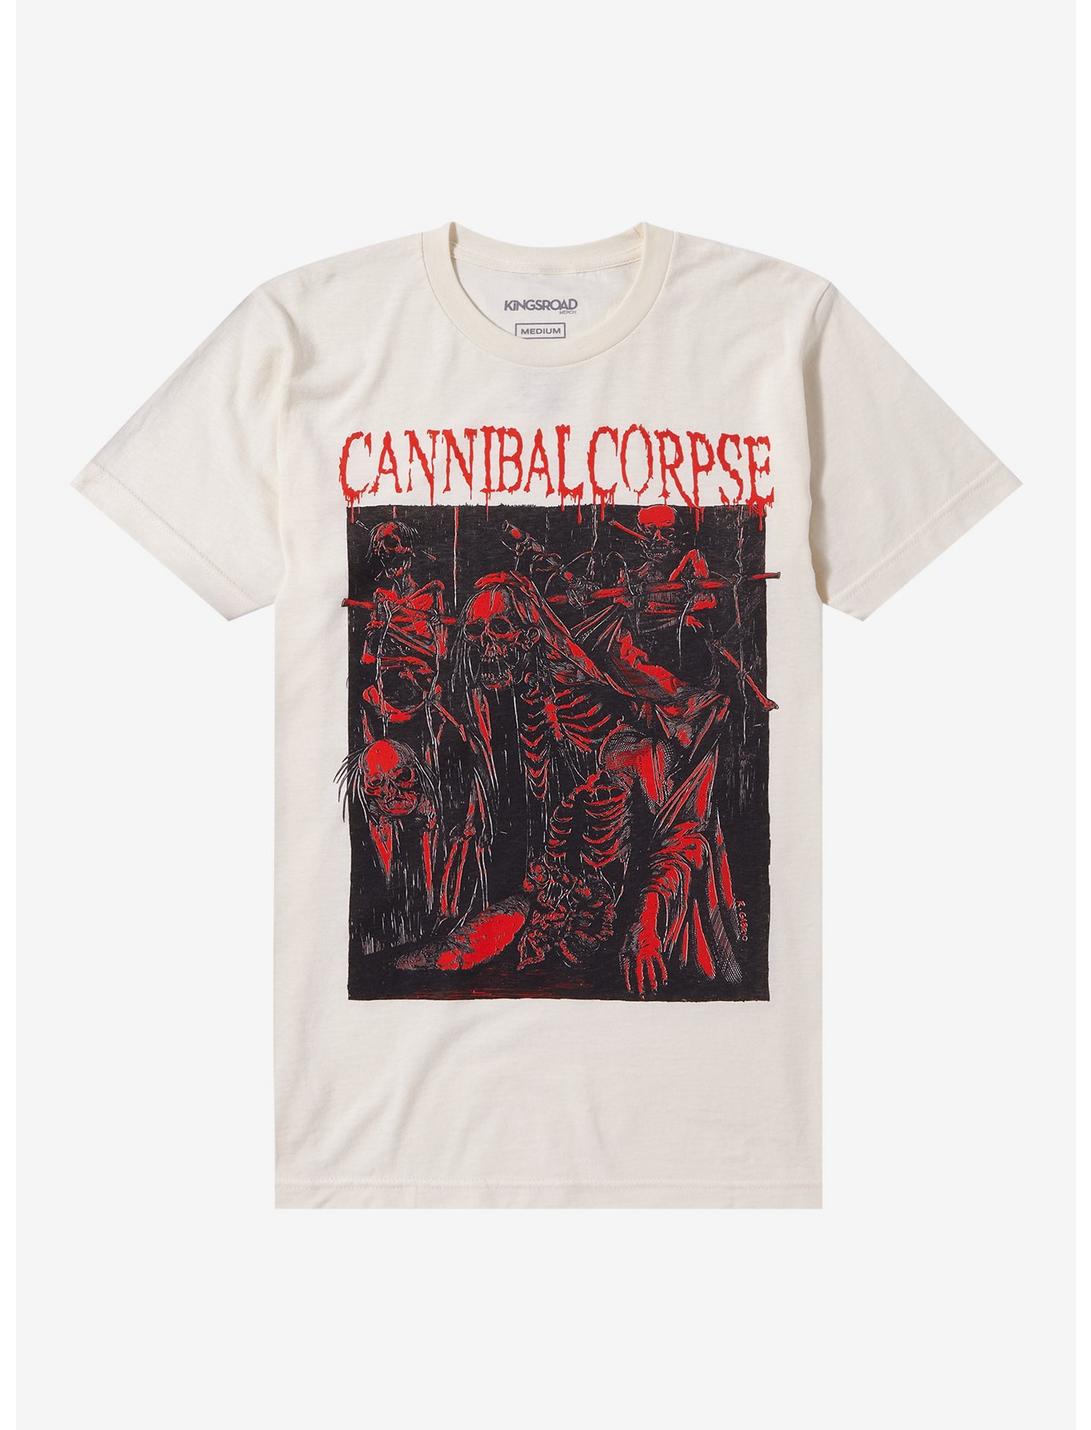 Cannibal Corpse Pierced Skeletons Boyfriend Fit Girls T-Shirt, CREAM, hi-res